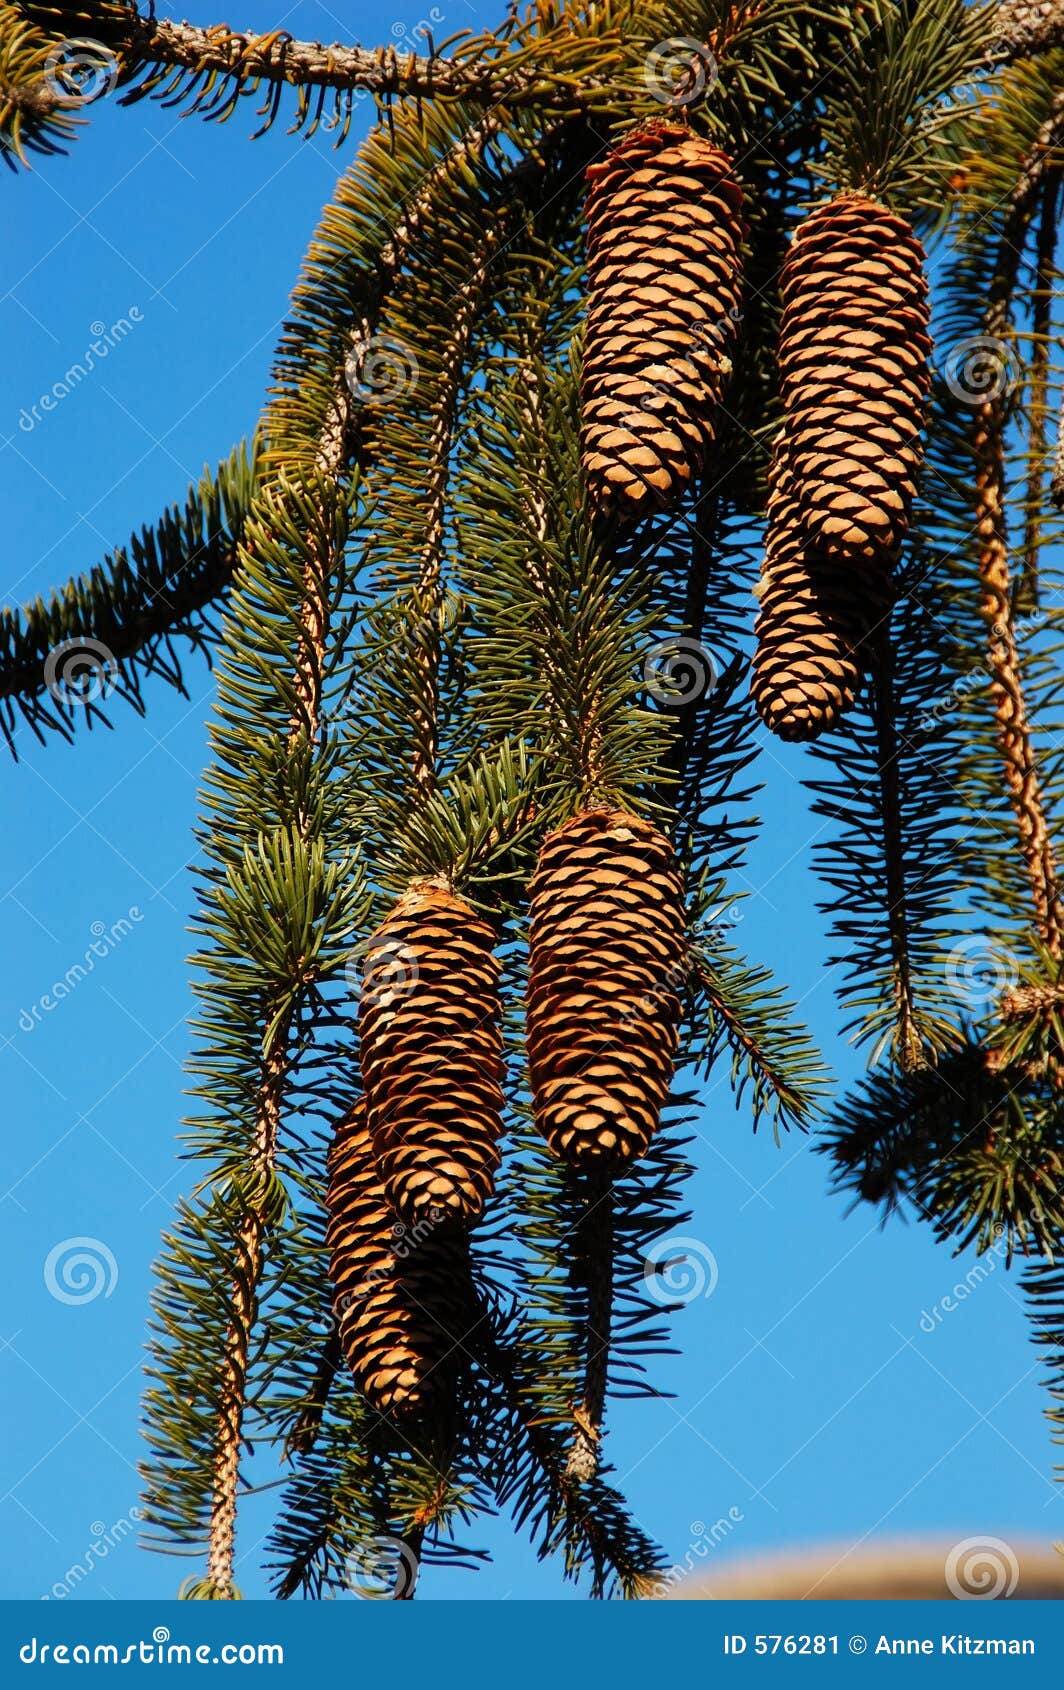 Weeping White Pine Tree Stock Image - Image: 576281